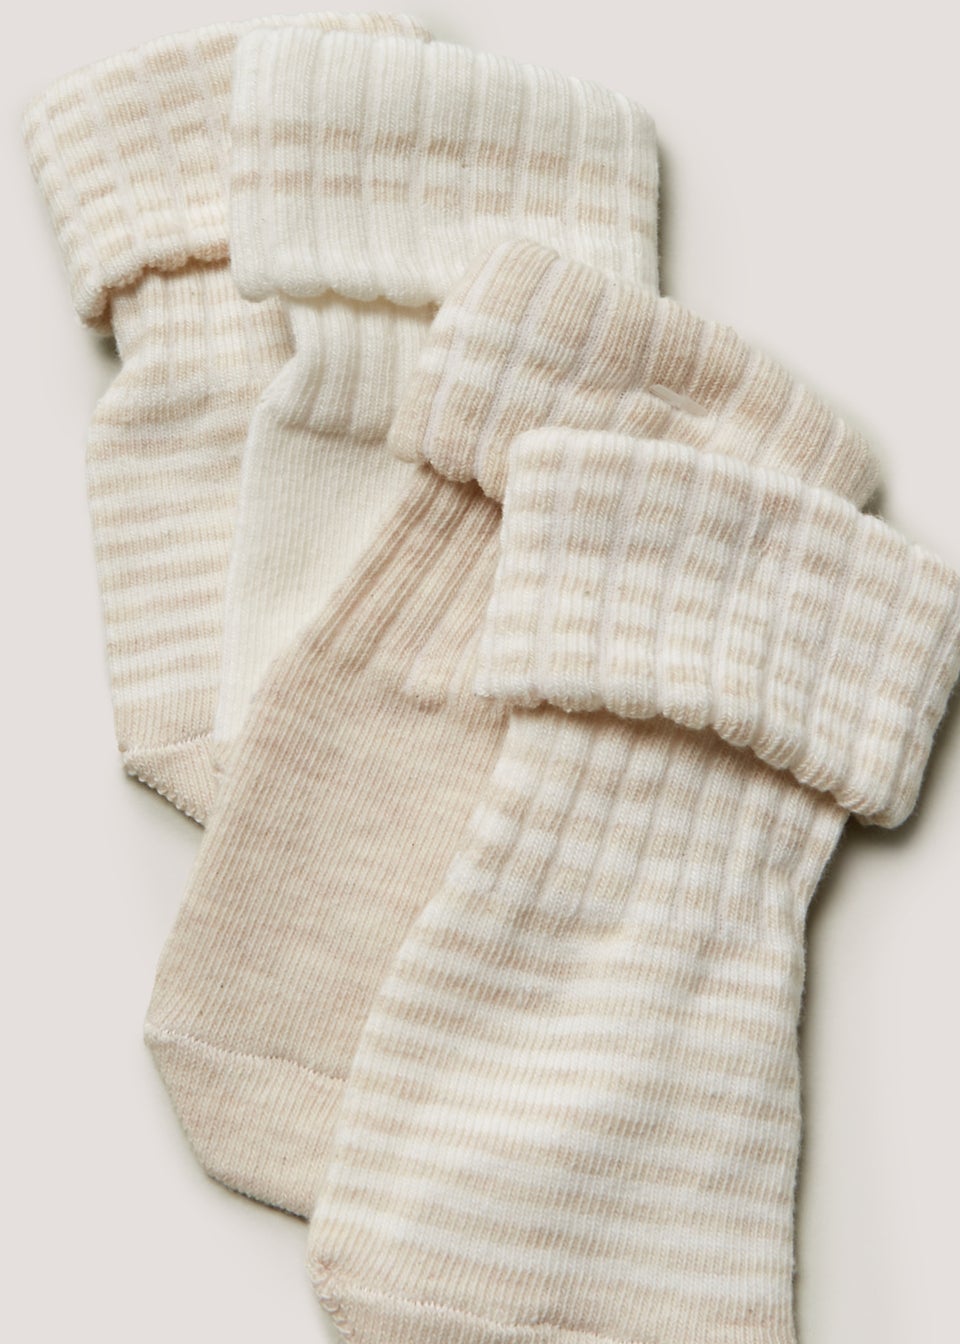 4 Pack Tonal Baby Socks (Newborn-12mths)